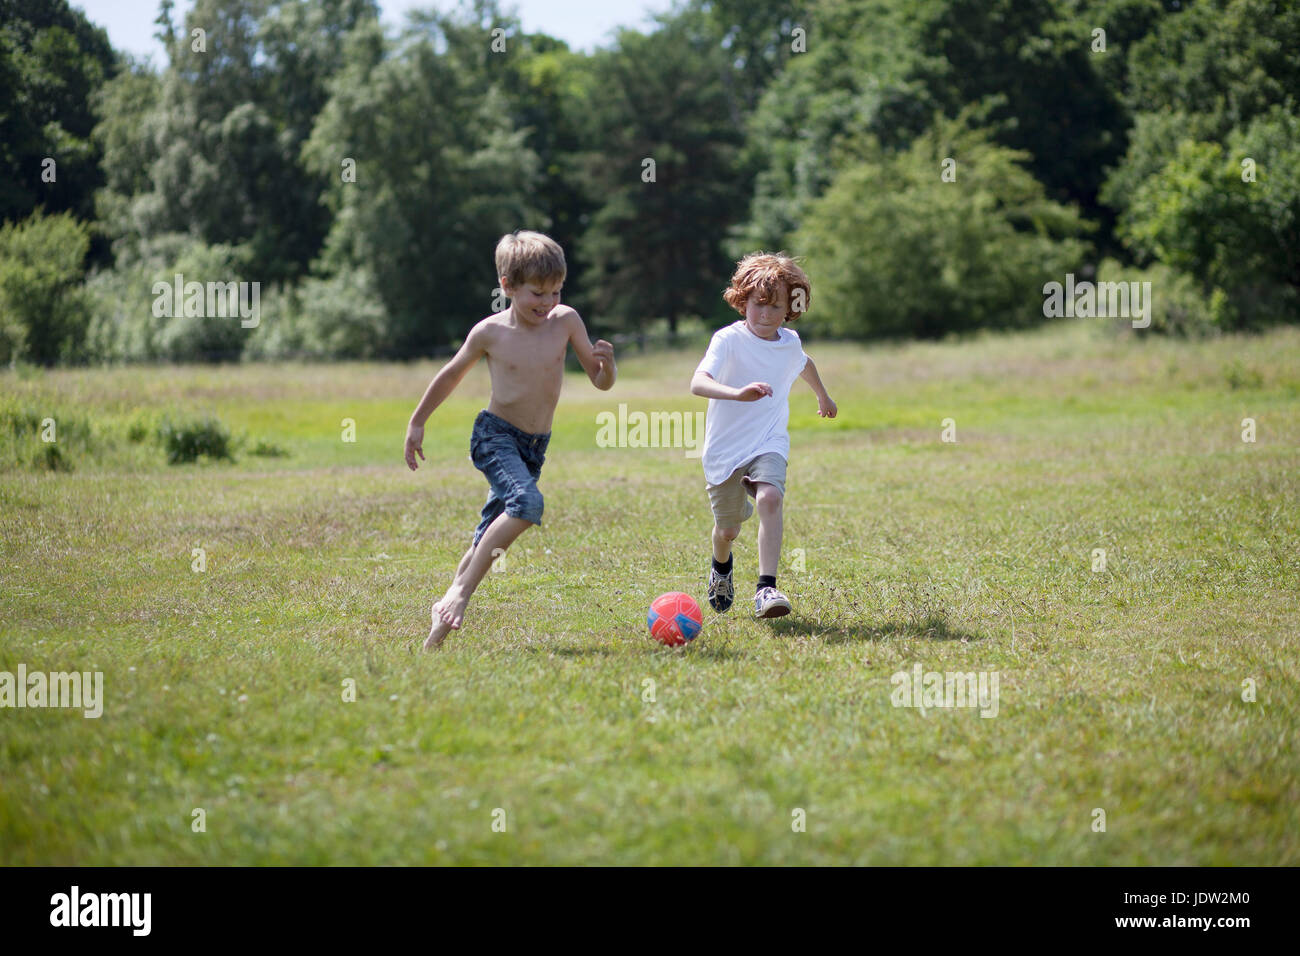 Children playing soccer in grassy field Stock Photo